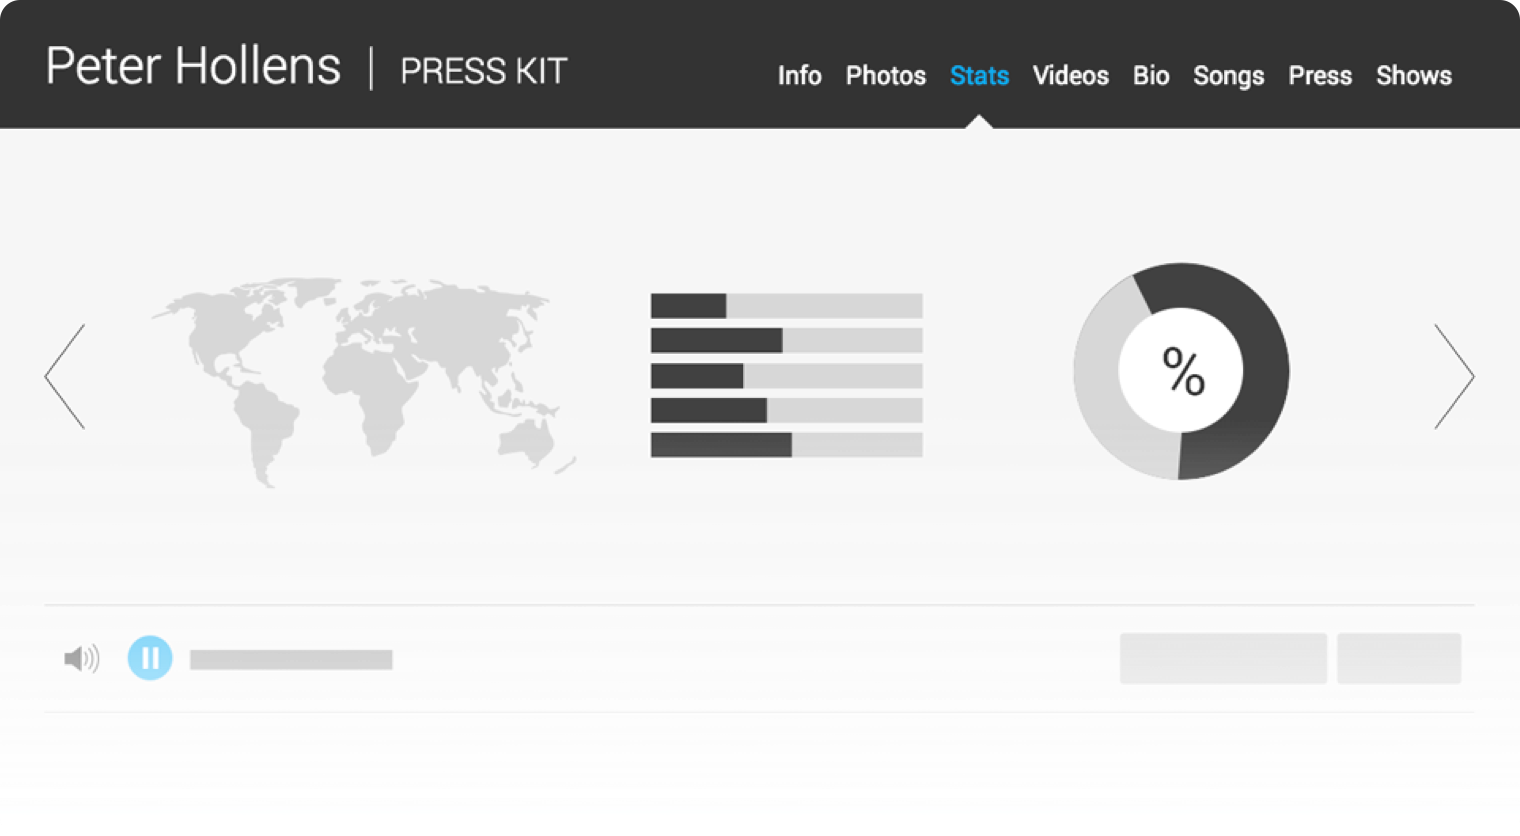 Sample of Electronic Press Kit on desktop browser.